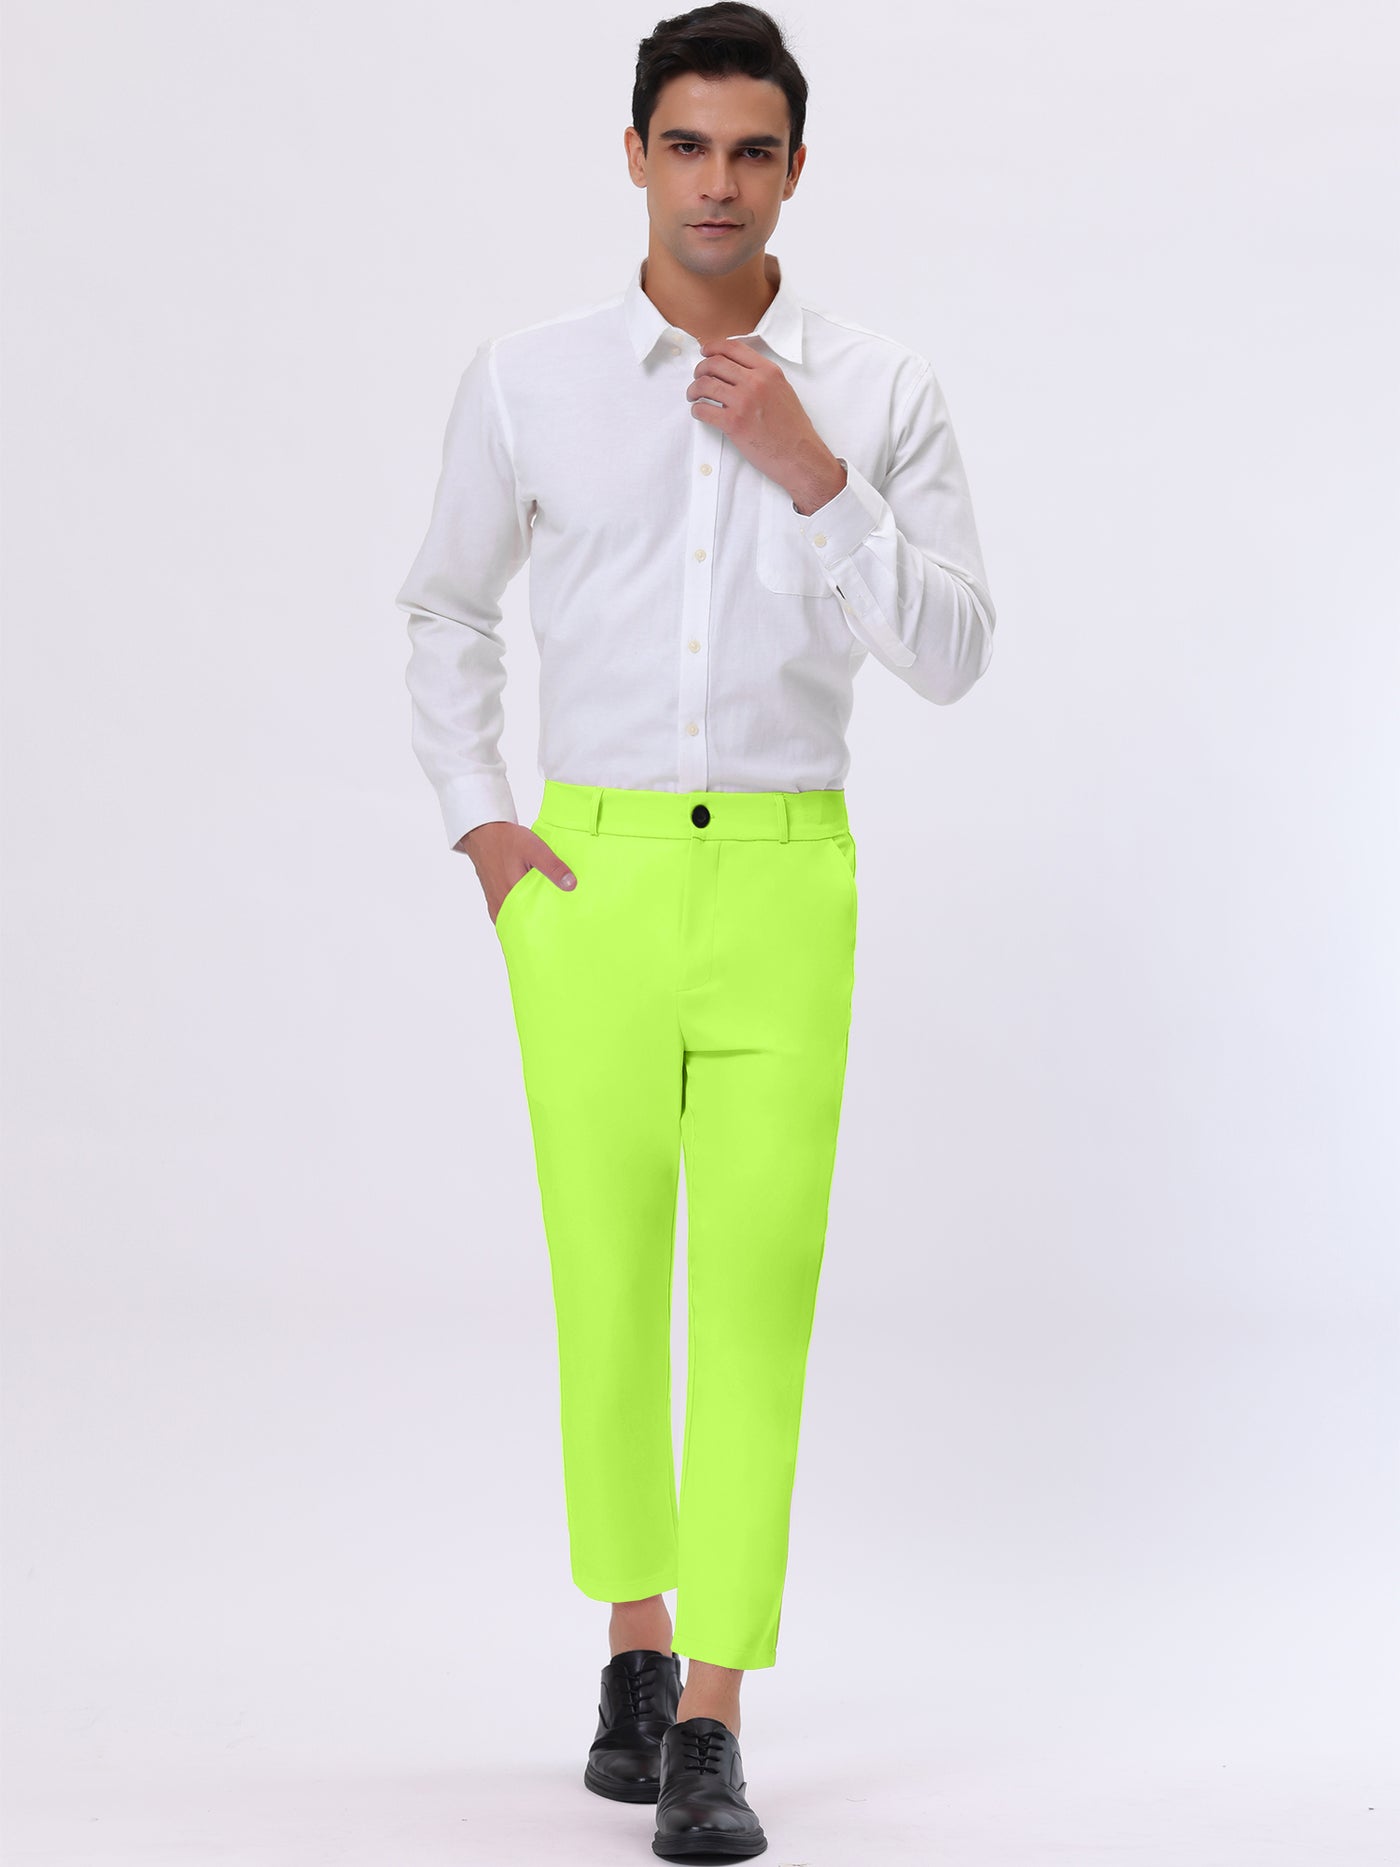 Bublédon Men's Dress Cropped Pants Ankle Length Solid Classic Fit Business Trousers